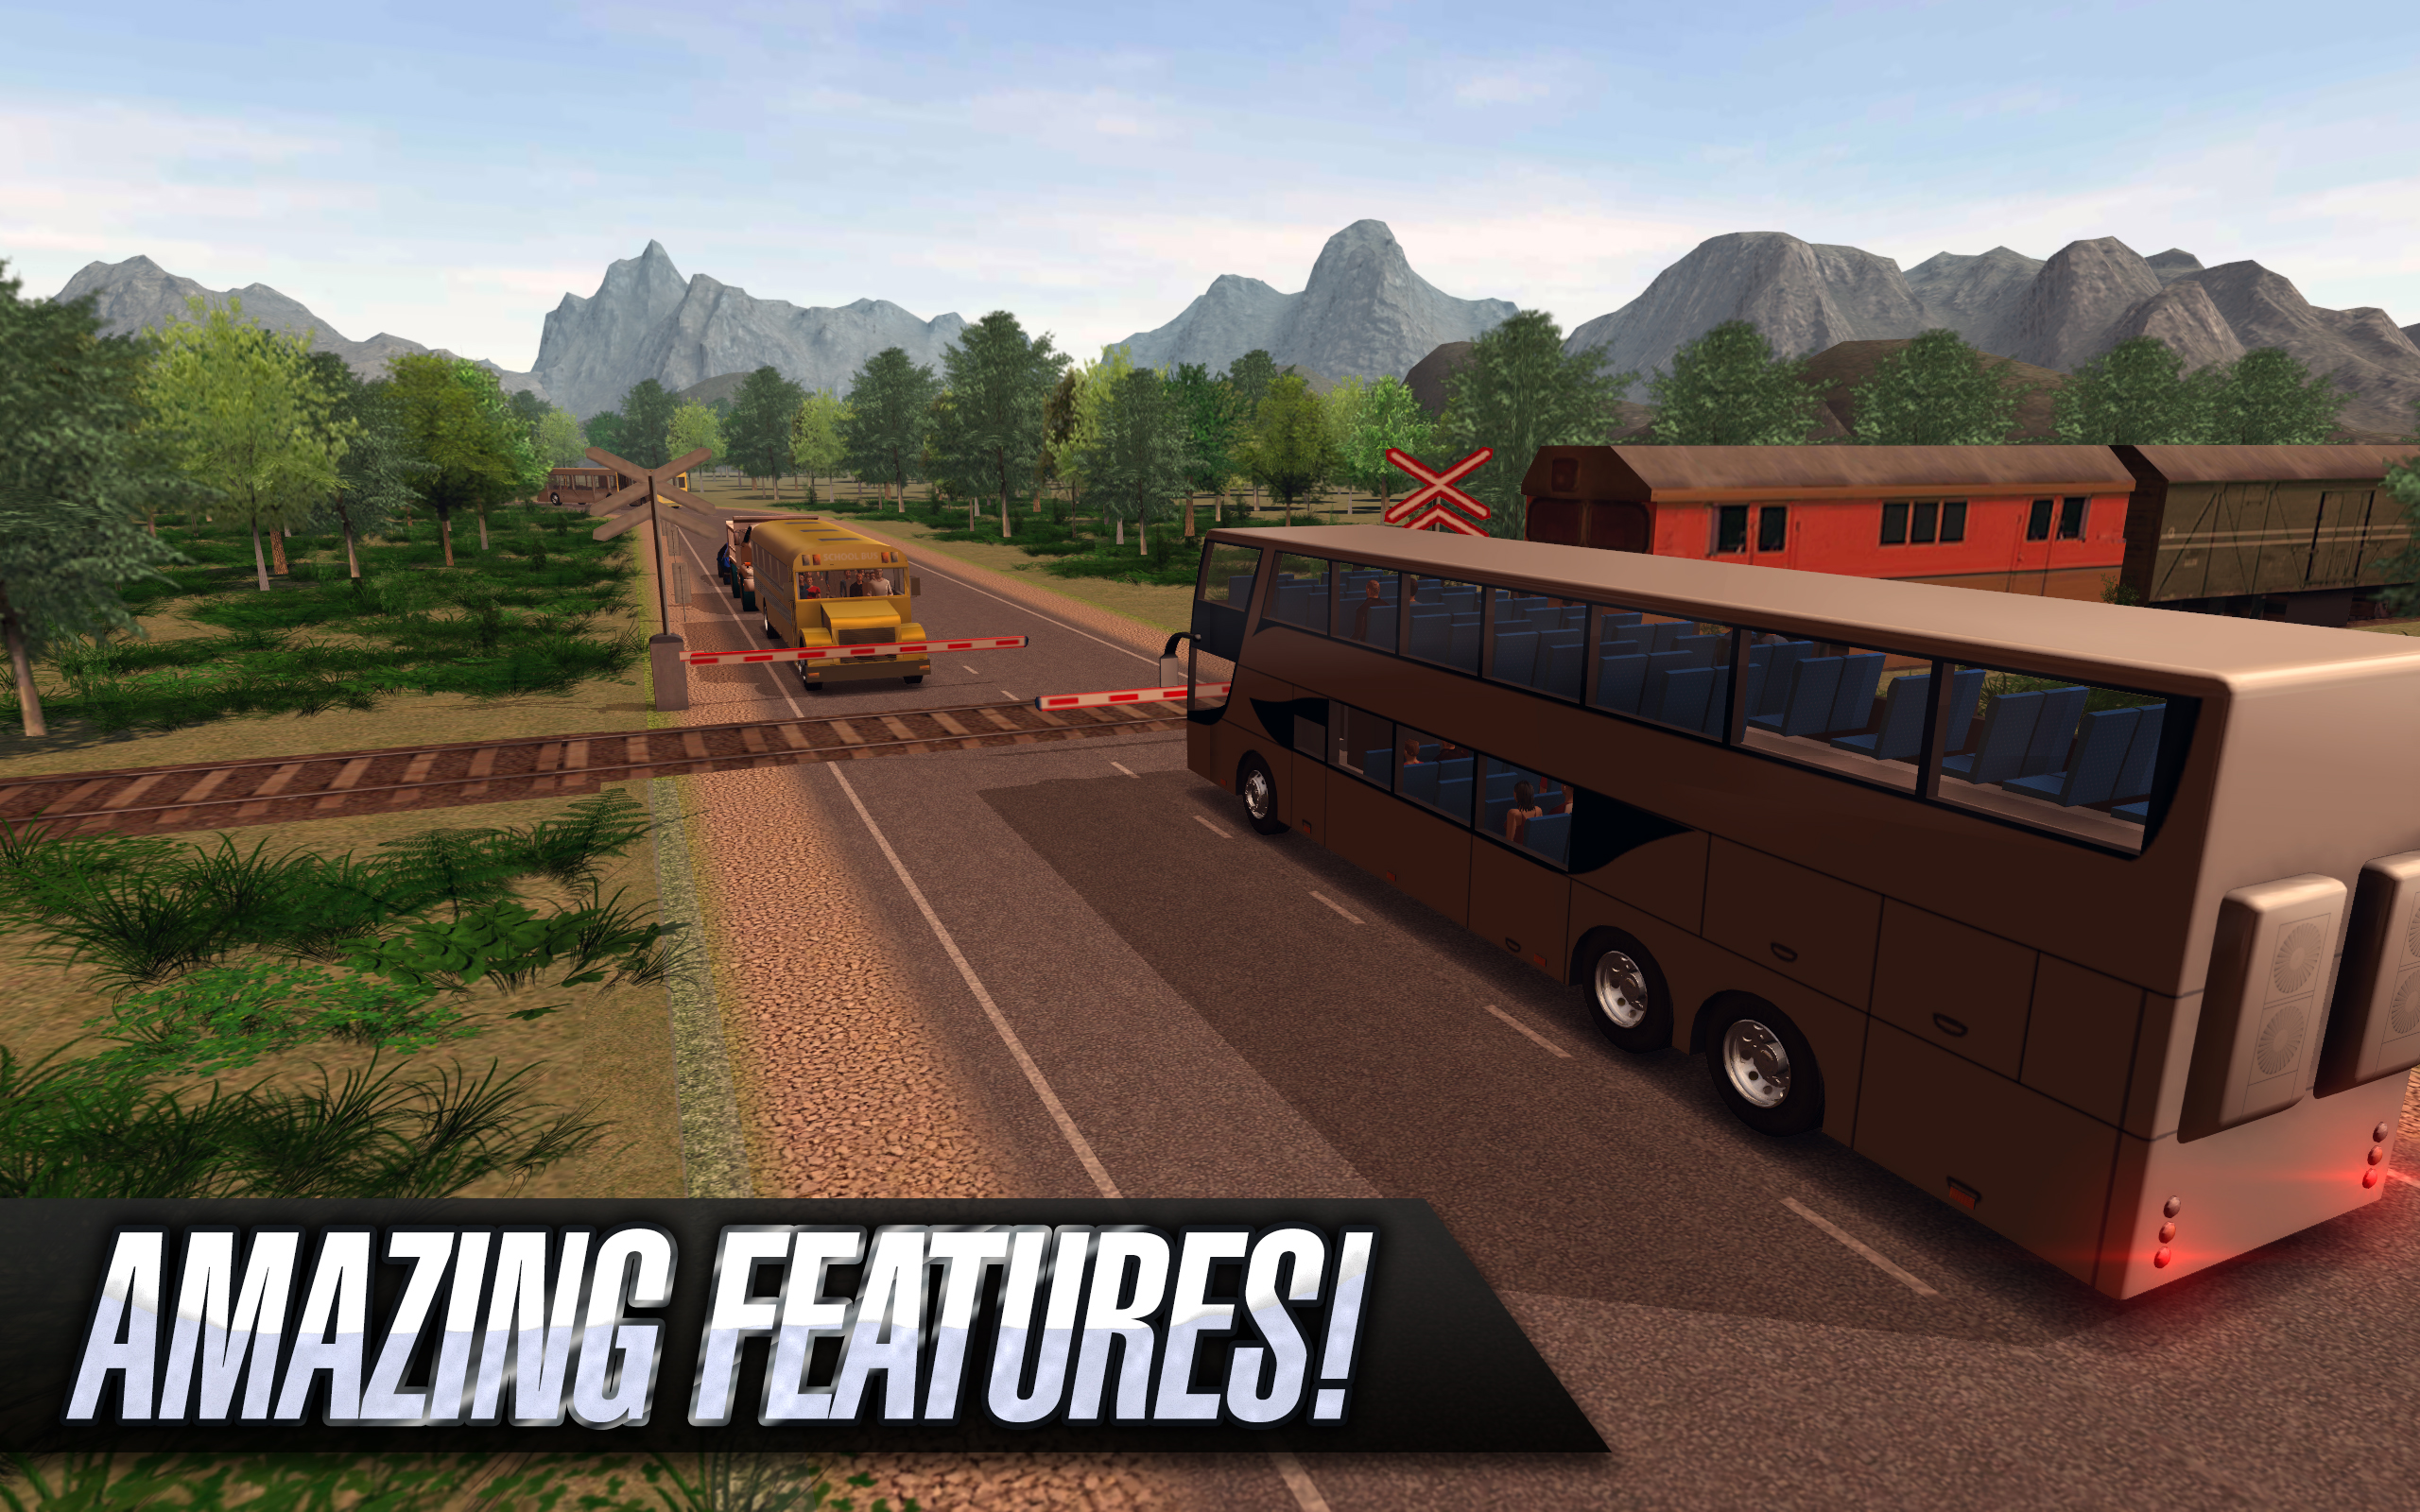 Bus Simulator School Bus Games on the App Store